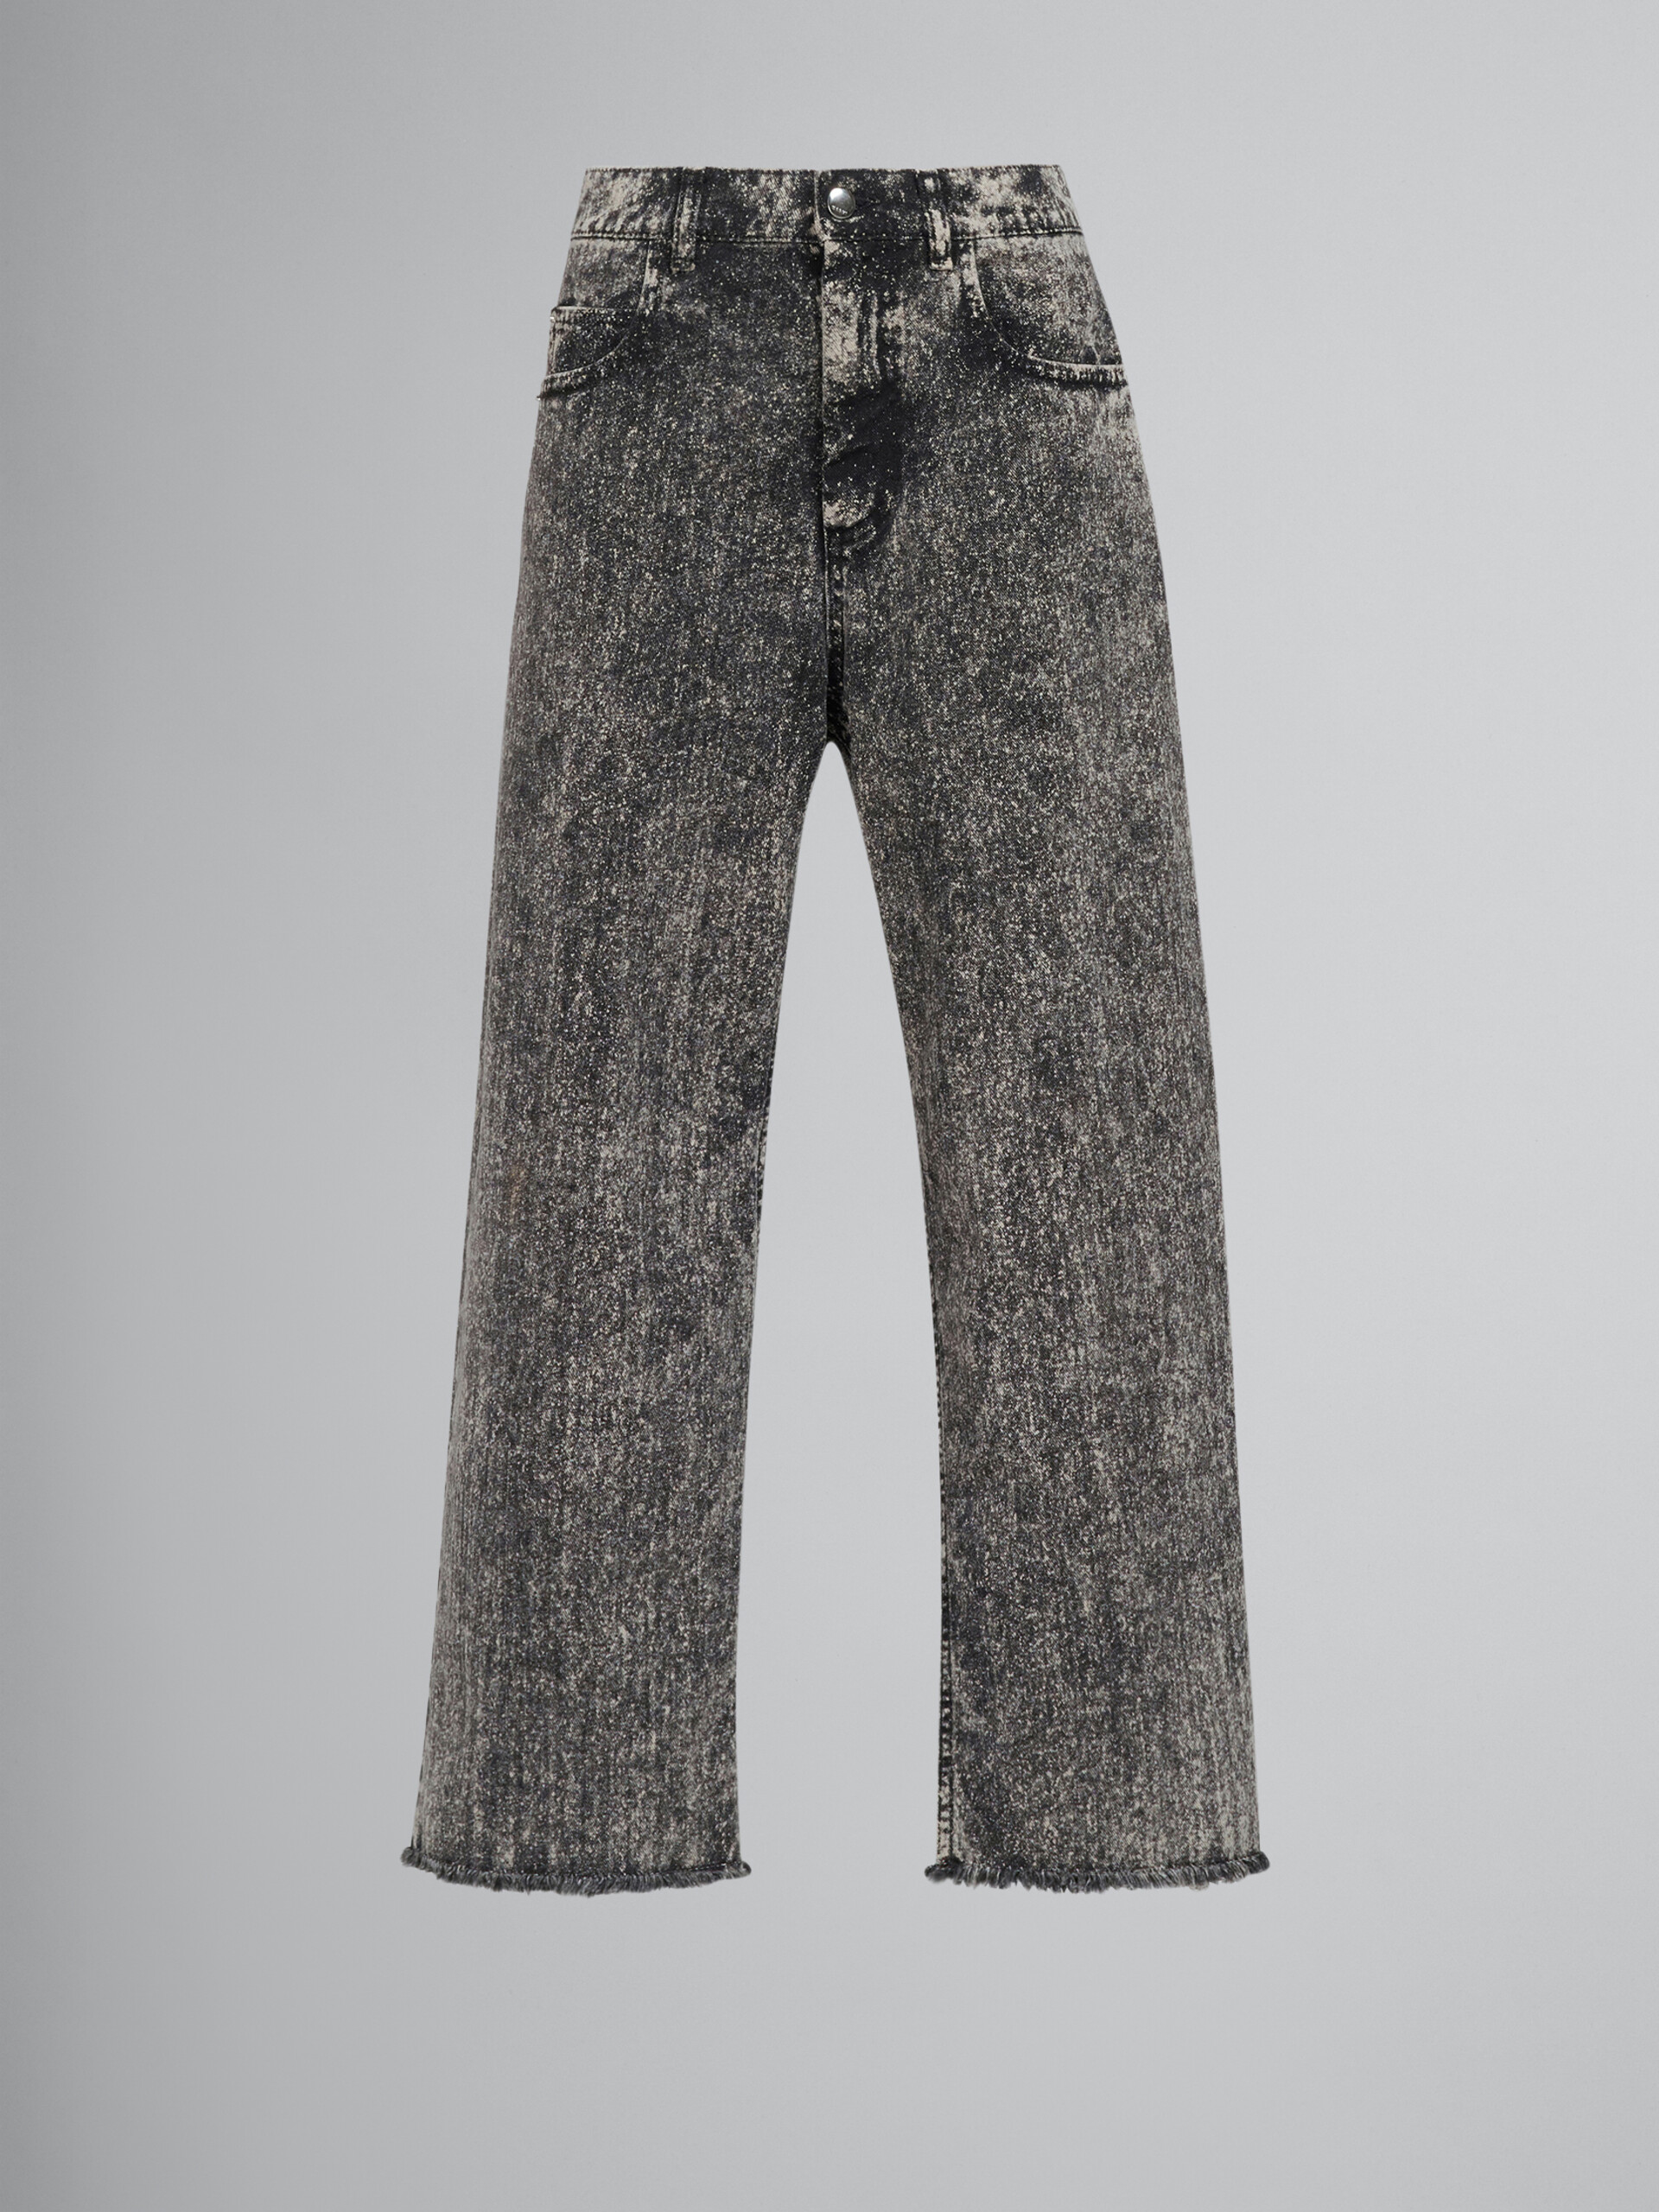 Black denim trousers - Pants - Image 1